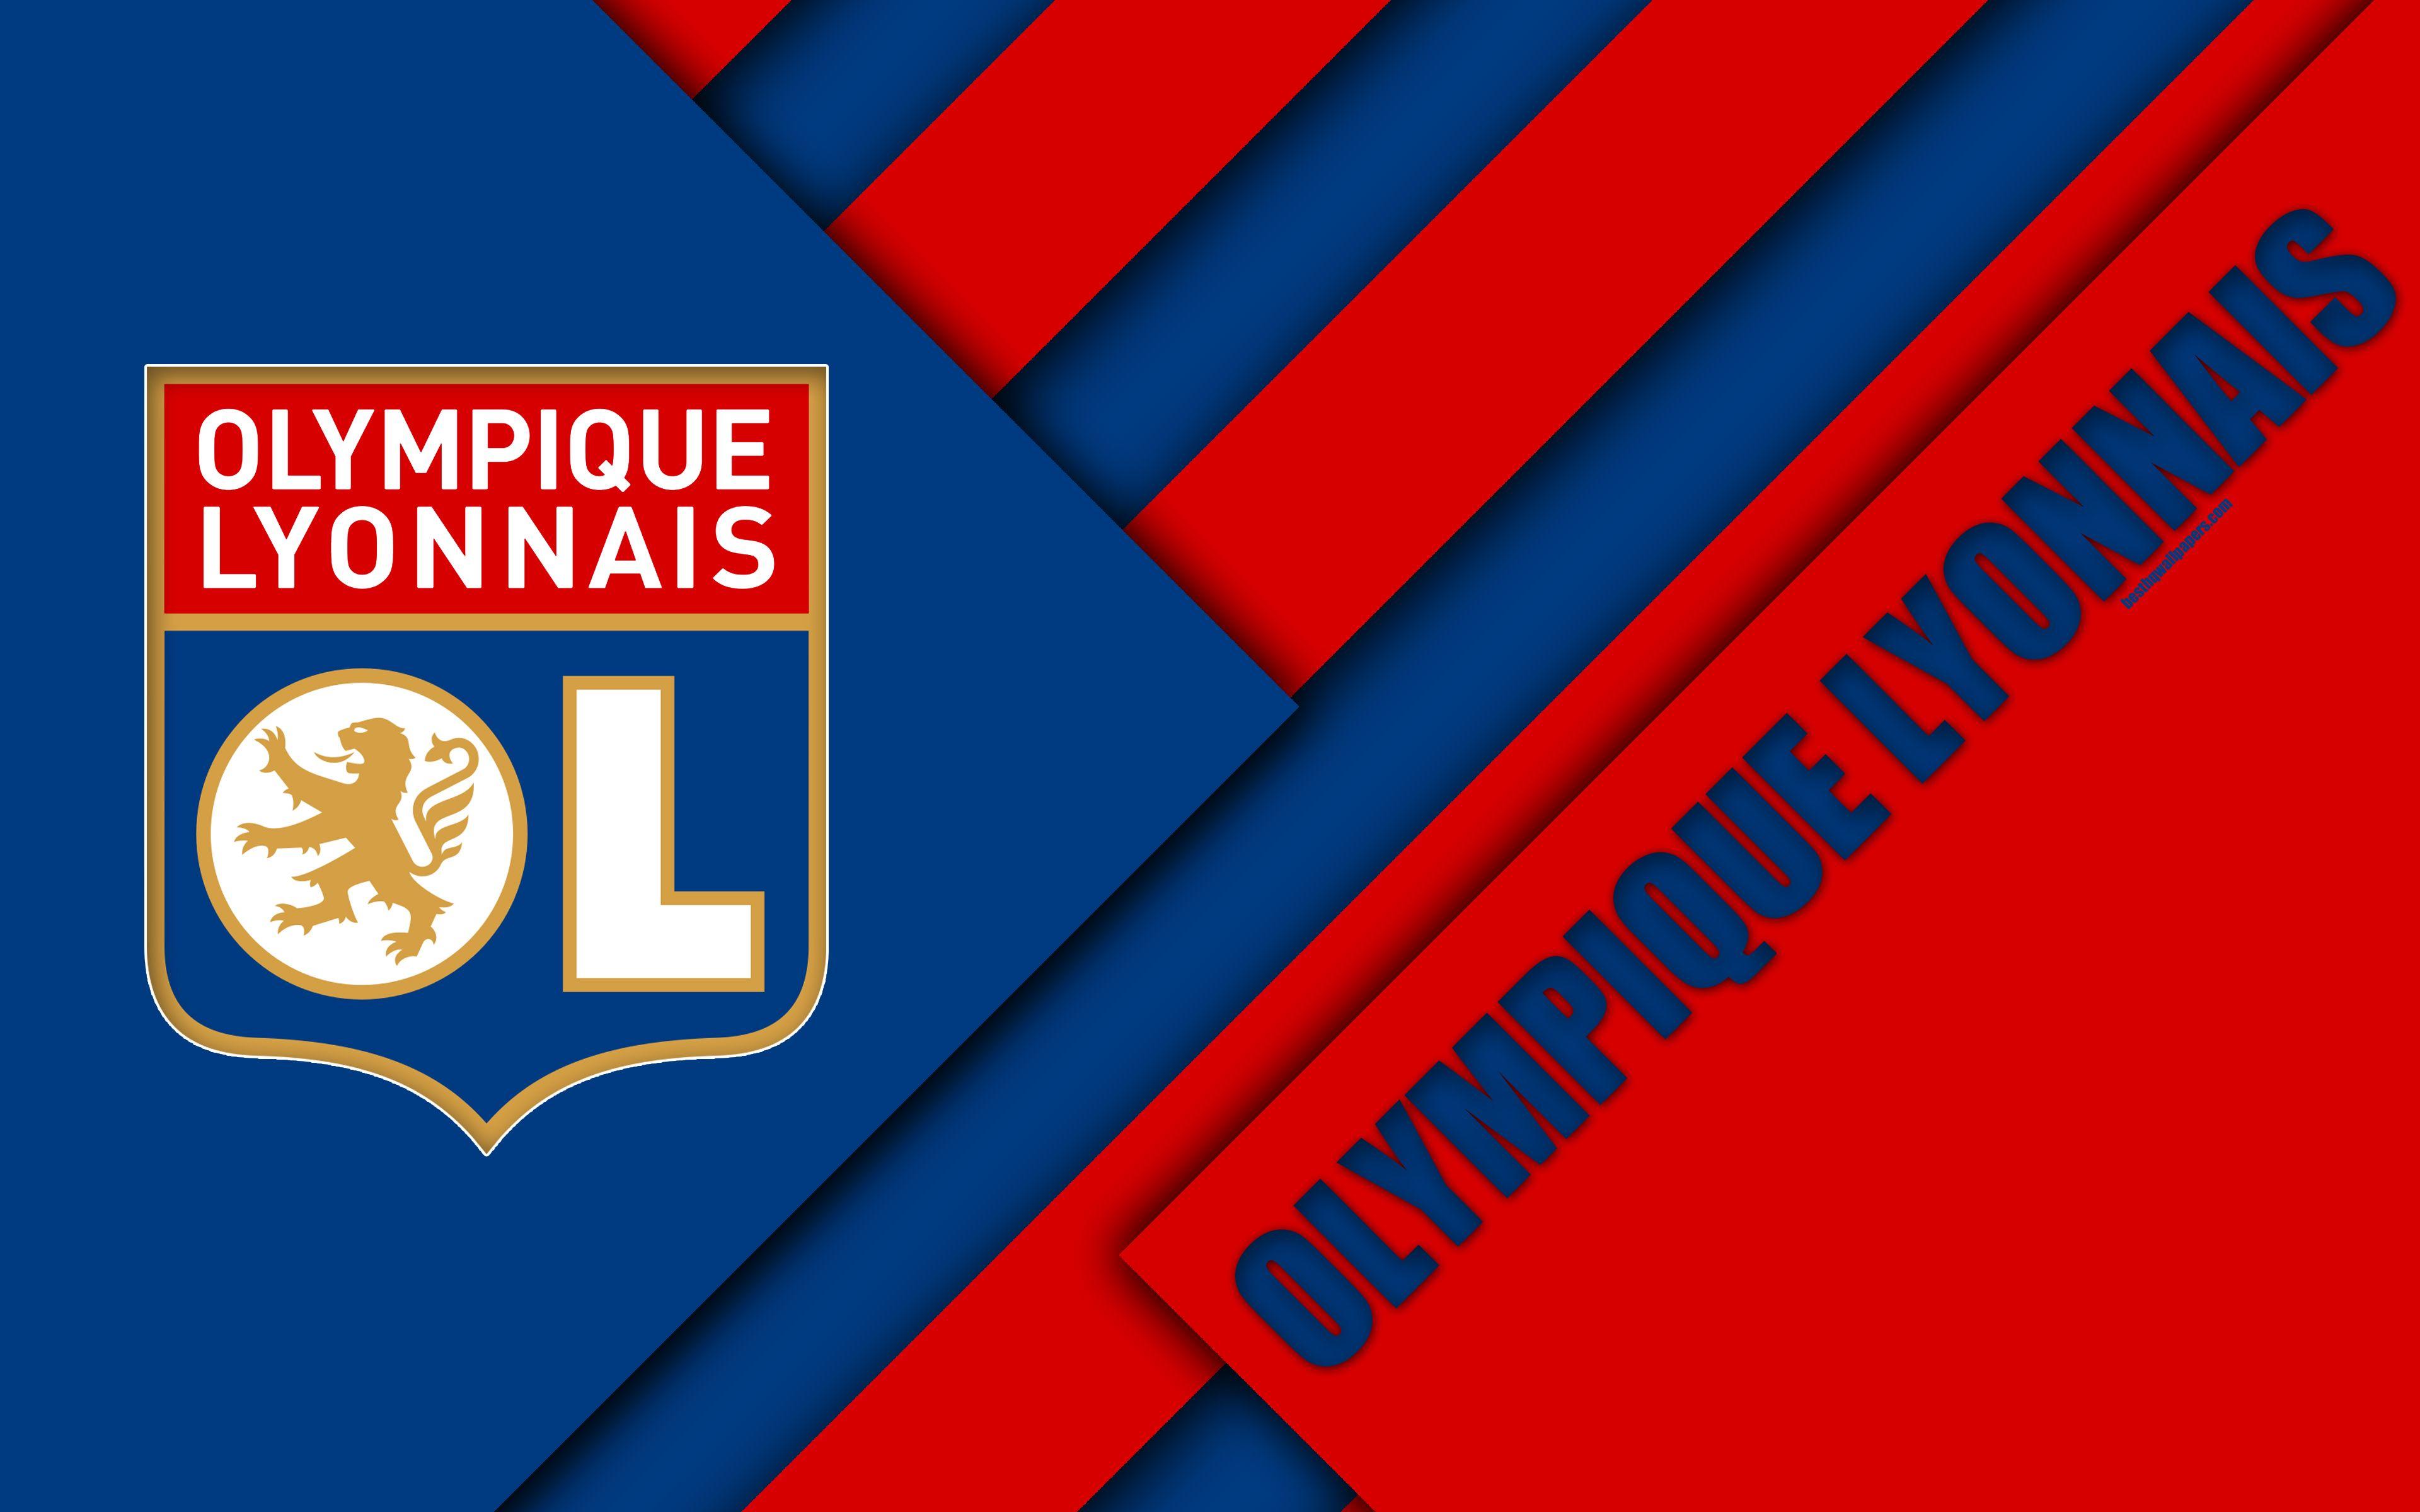 Download wallpaper Olympique Lyonnais, French football club, Lyon